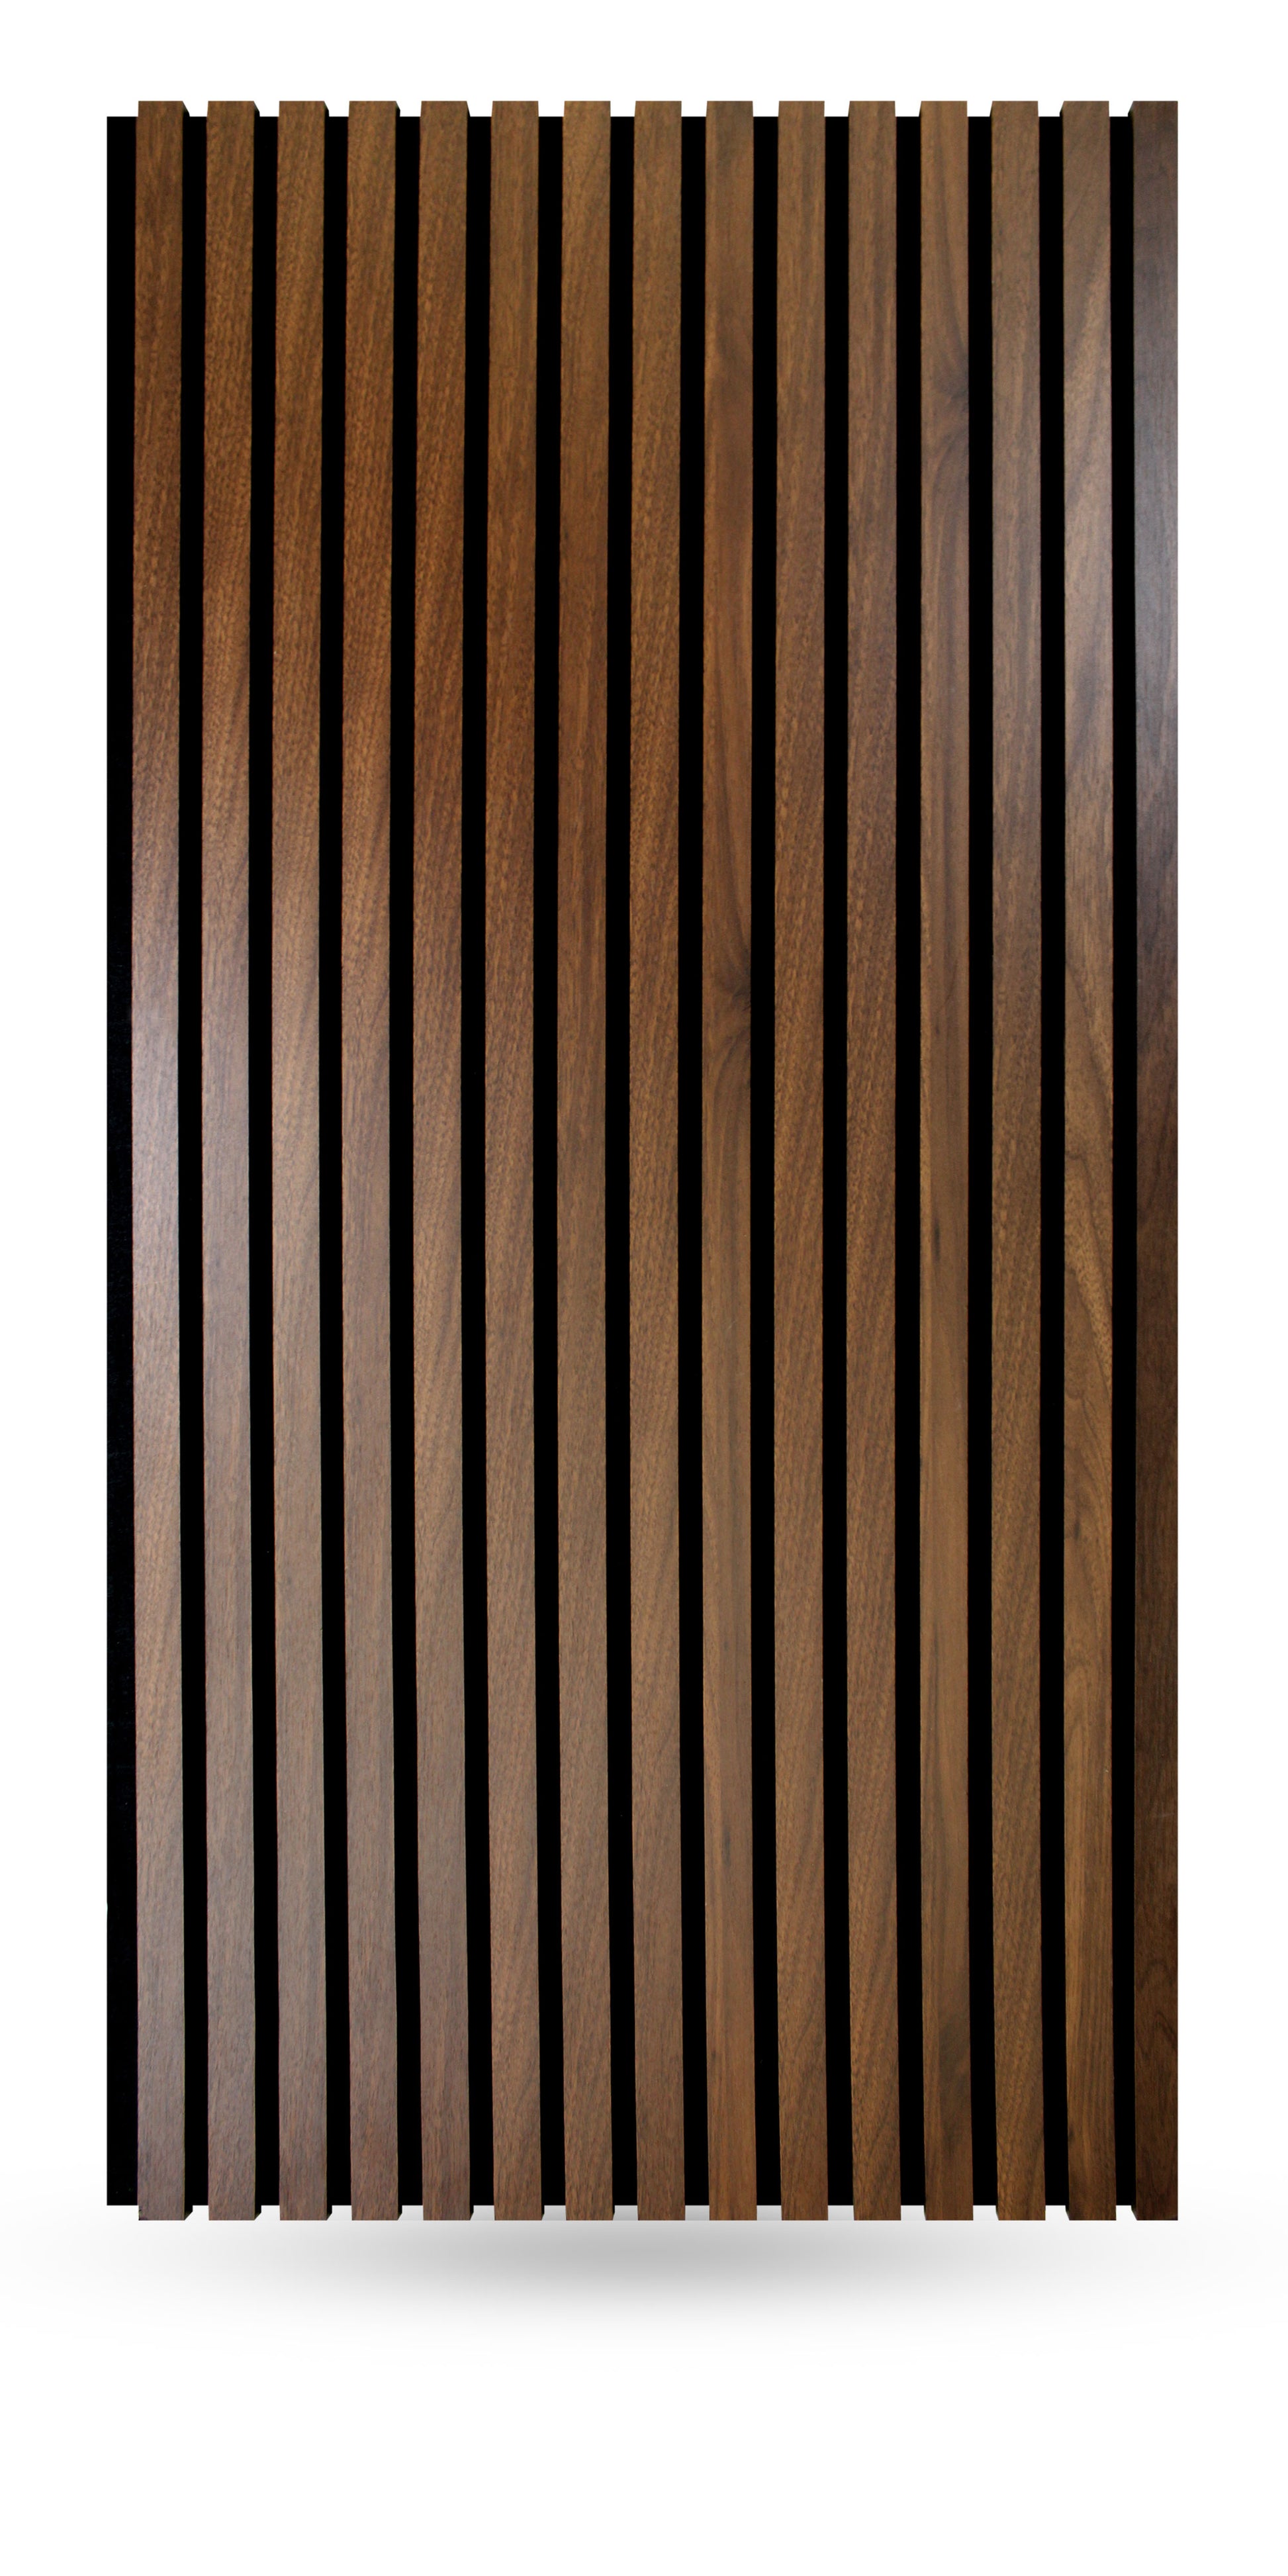 Antique Oak Acoustic Slat Wood Paneling for Soundproofing Walls